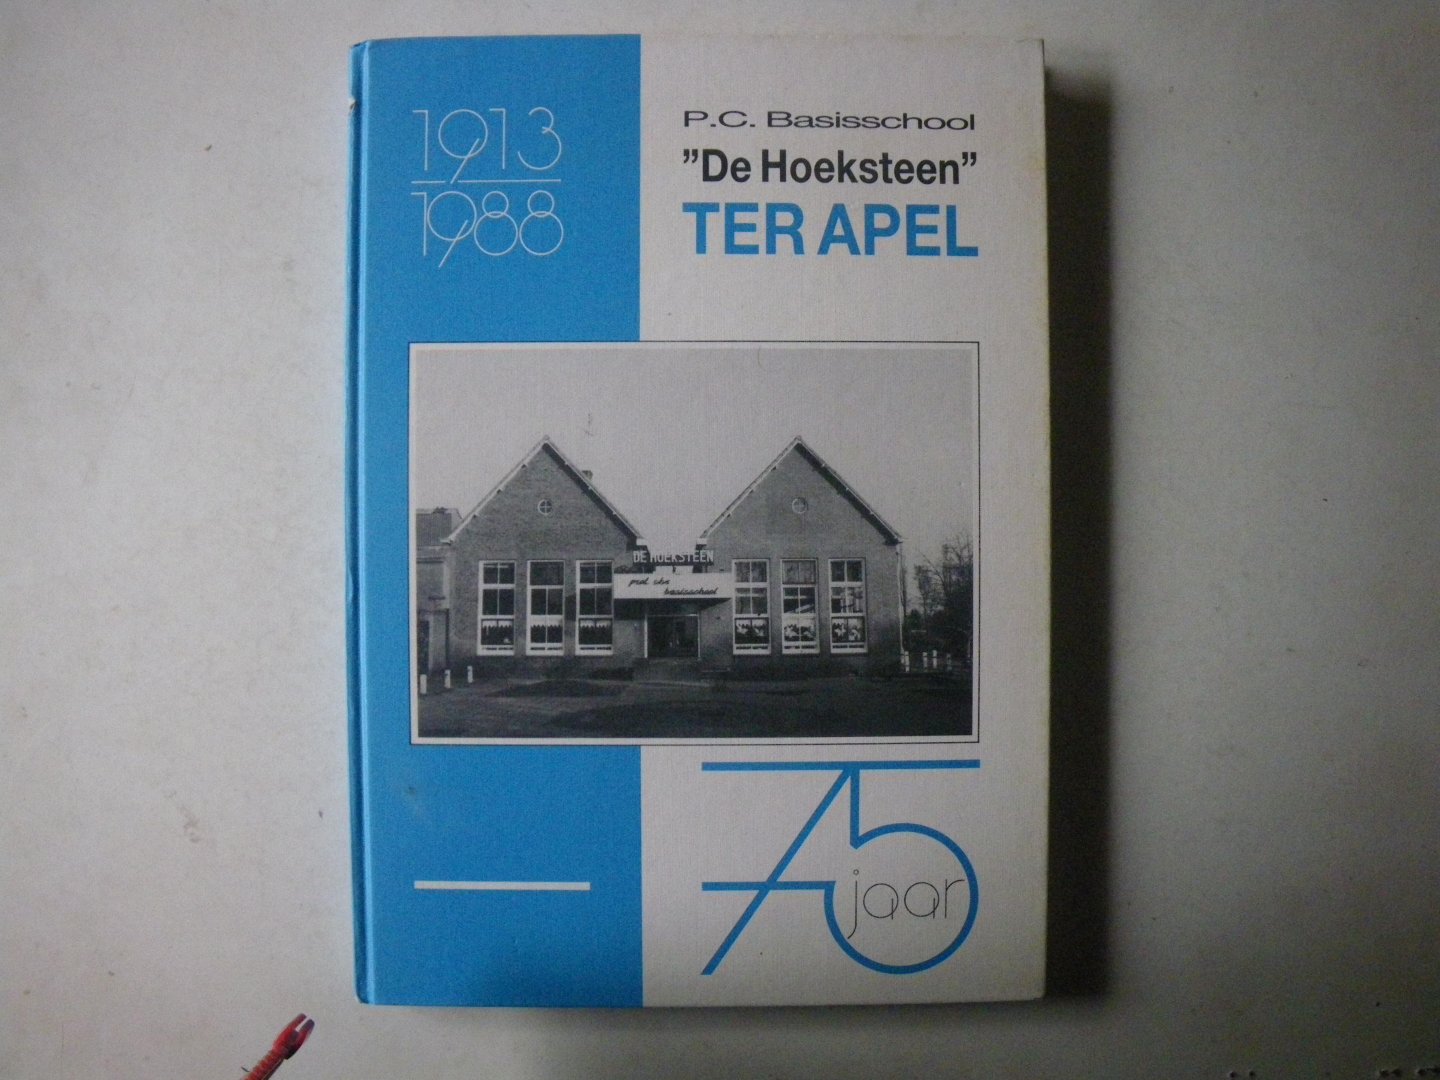 Idema, S. e.a. - P.C. Basisschool De Hoeksteen Ter Apel 75 jaar 1913 - 1988.